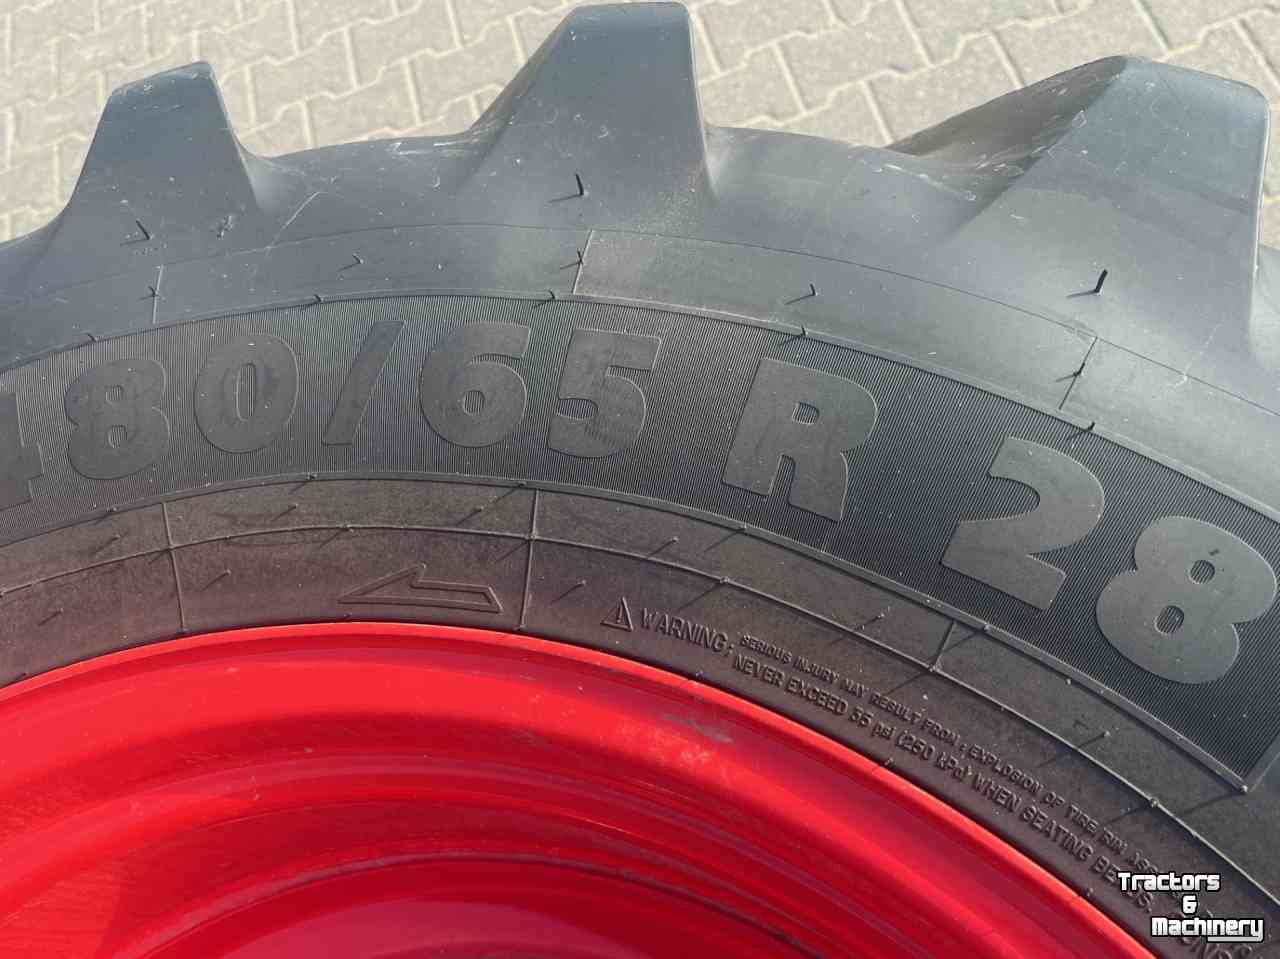 Wheels, Tyres, Rims & Dual spacers Michelin 480/65-r 28 - 600/65- r 38